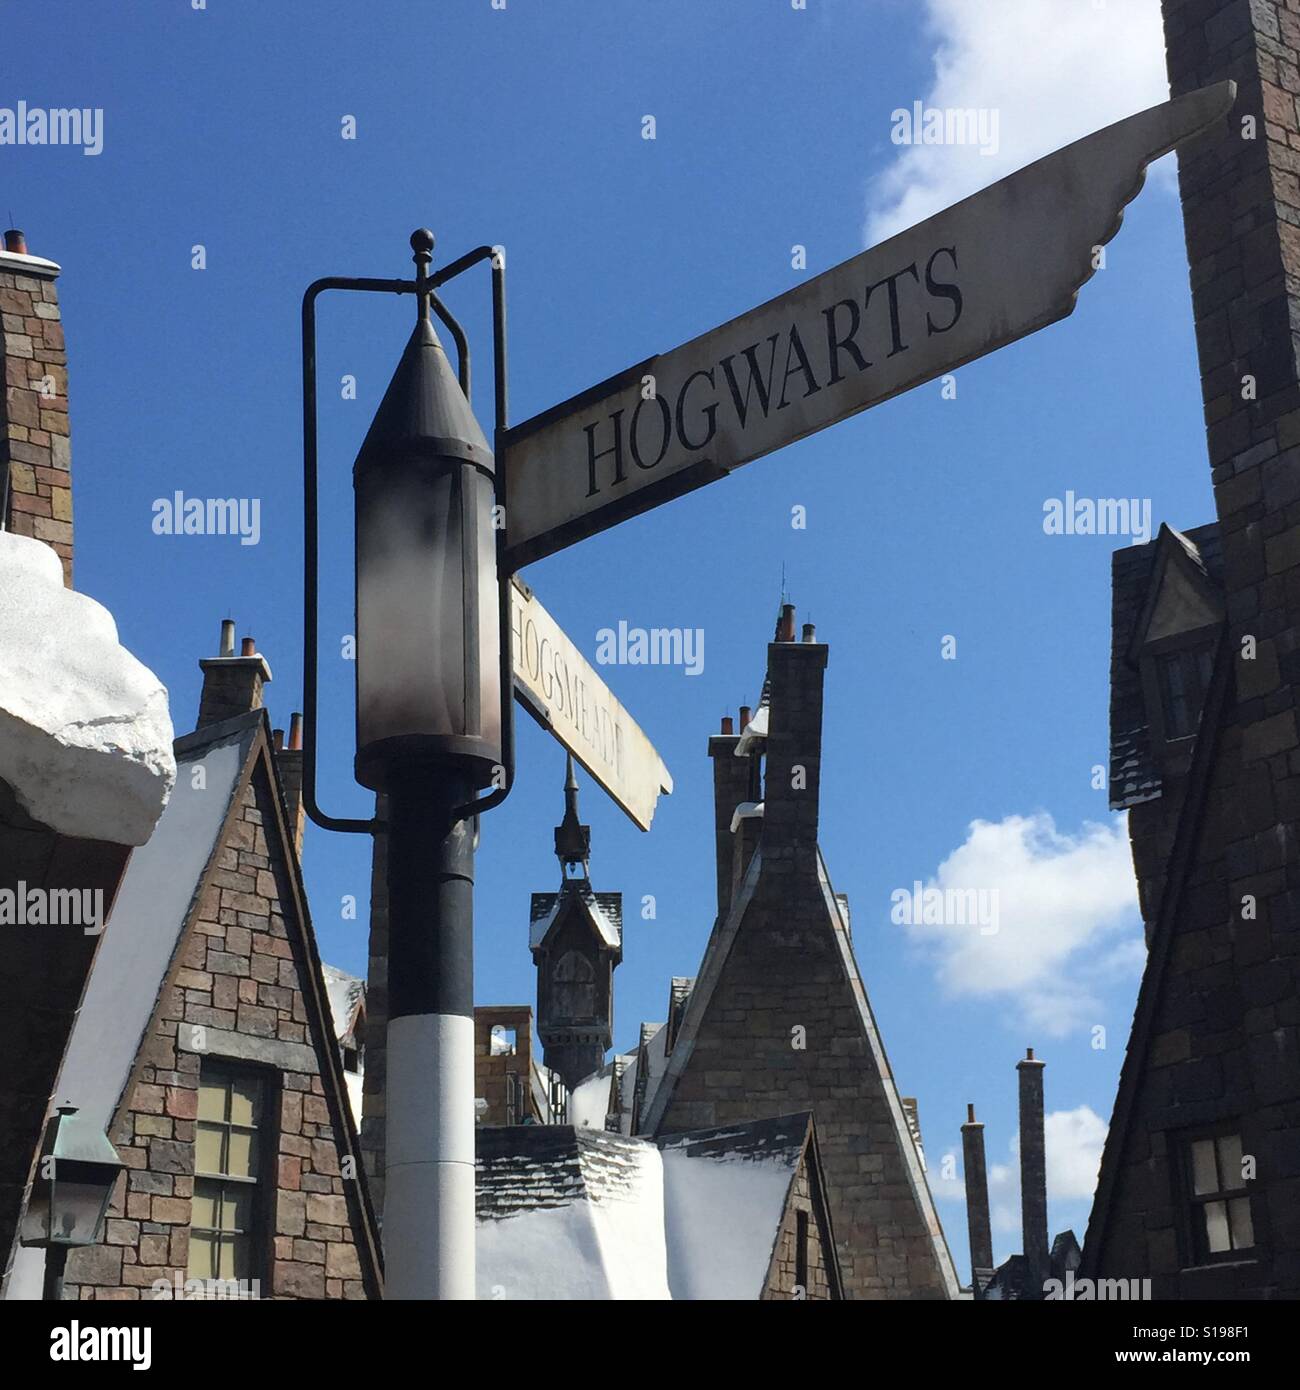 Hogwarts Street Sign Stock Photo